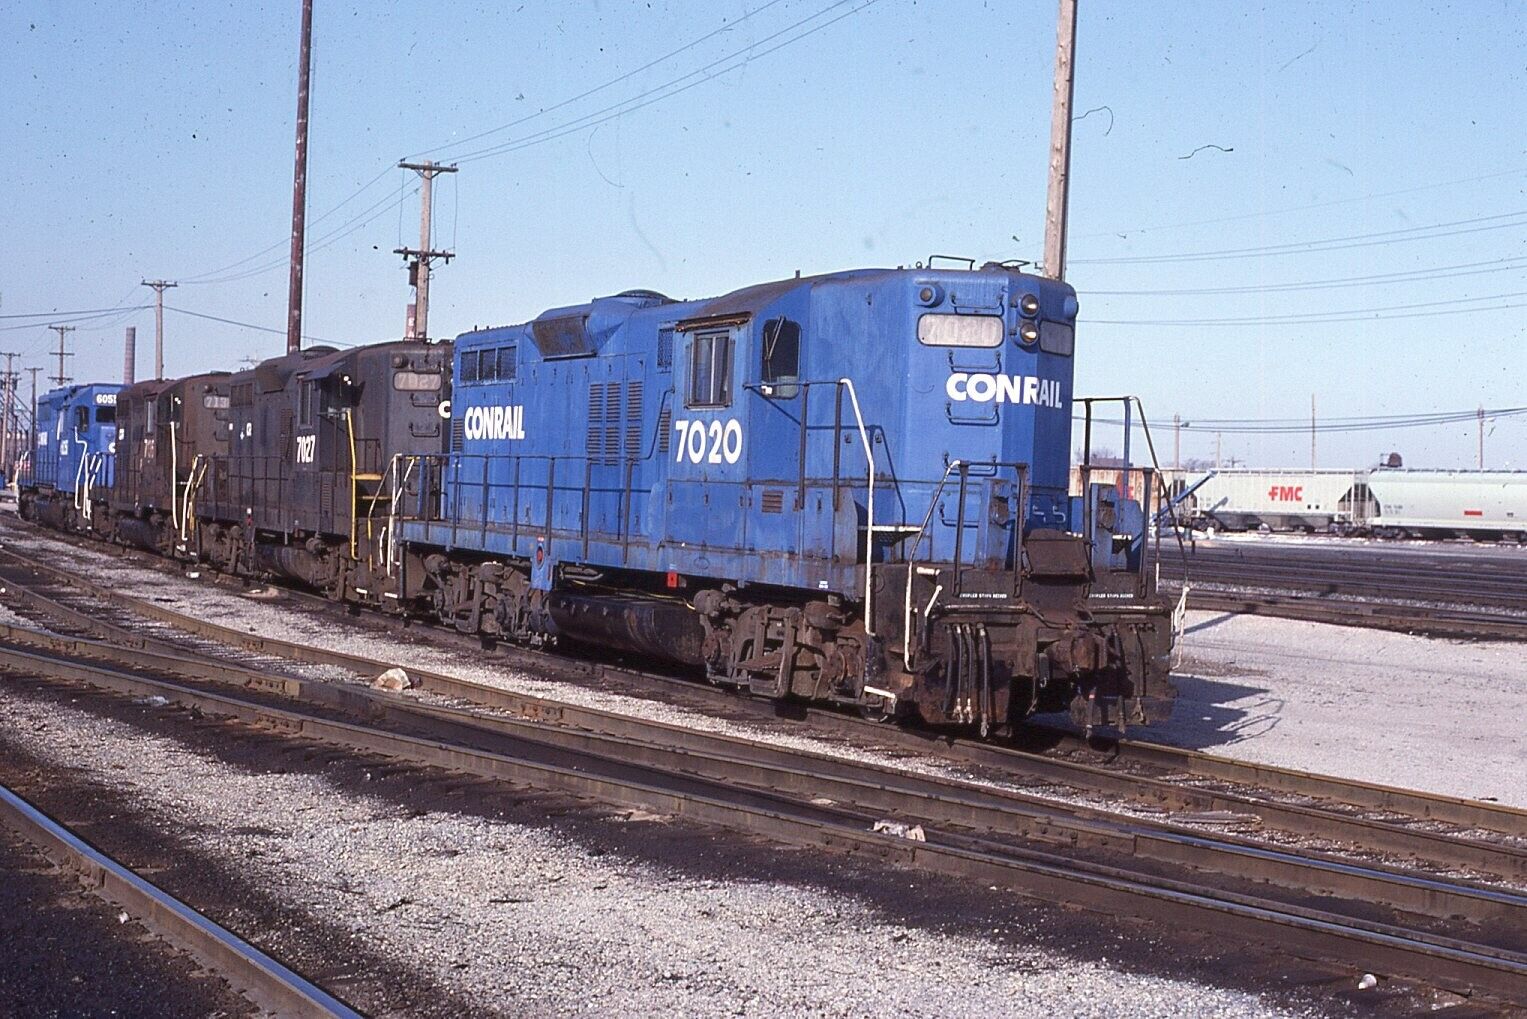 Original Train Slide Conrail #7020 1984 Cleveland Ohio #30